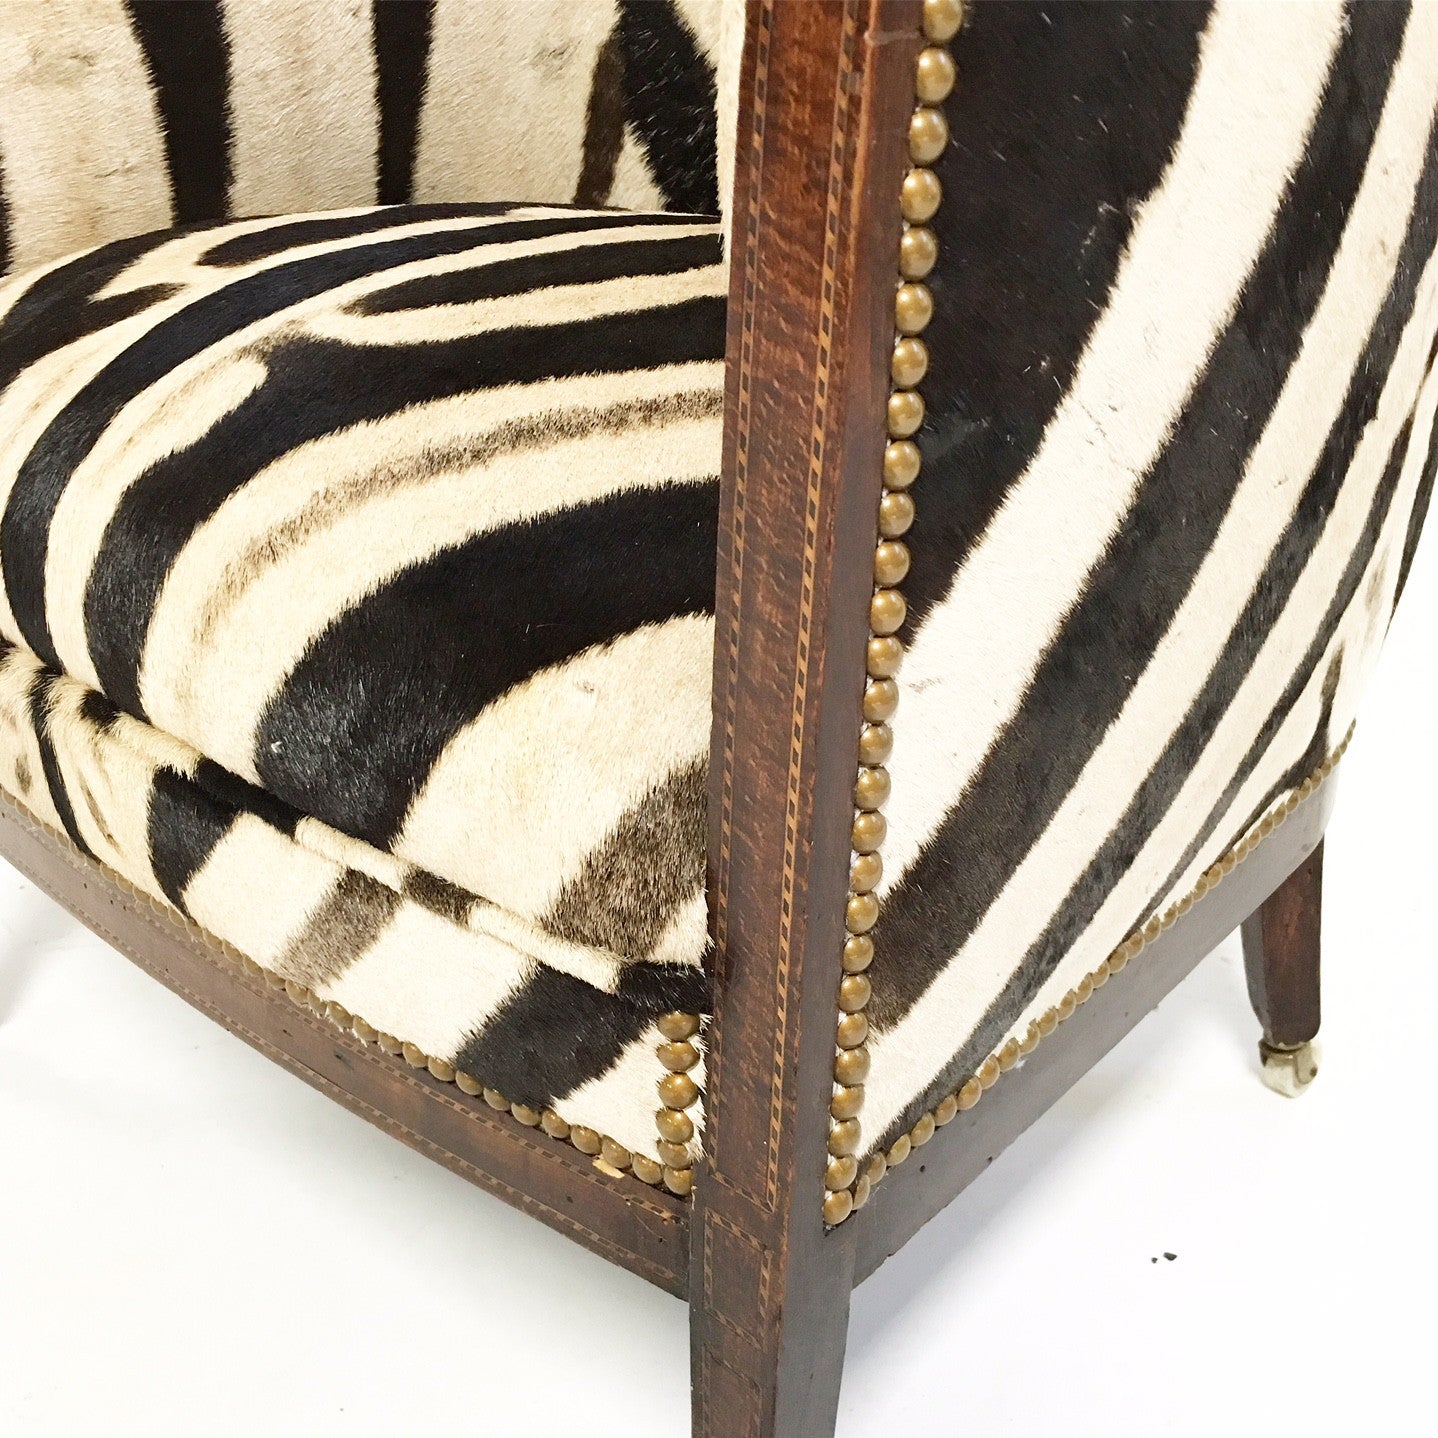 1930s Barrel Chair in Zebra Hide - FORSYTH